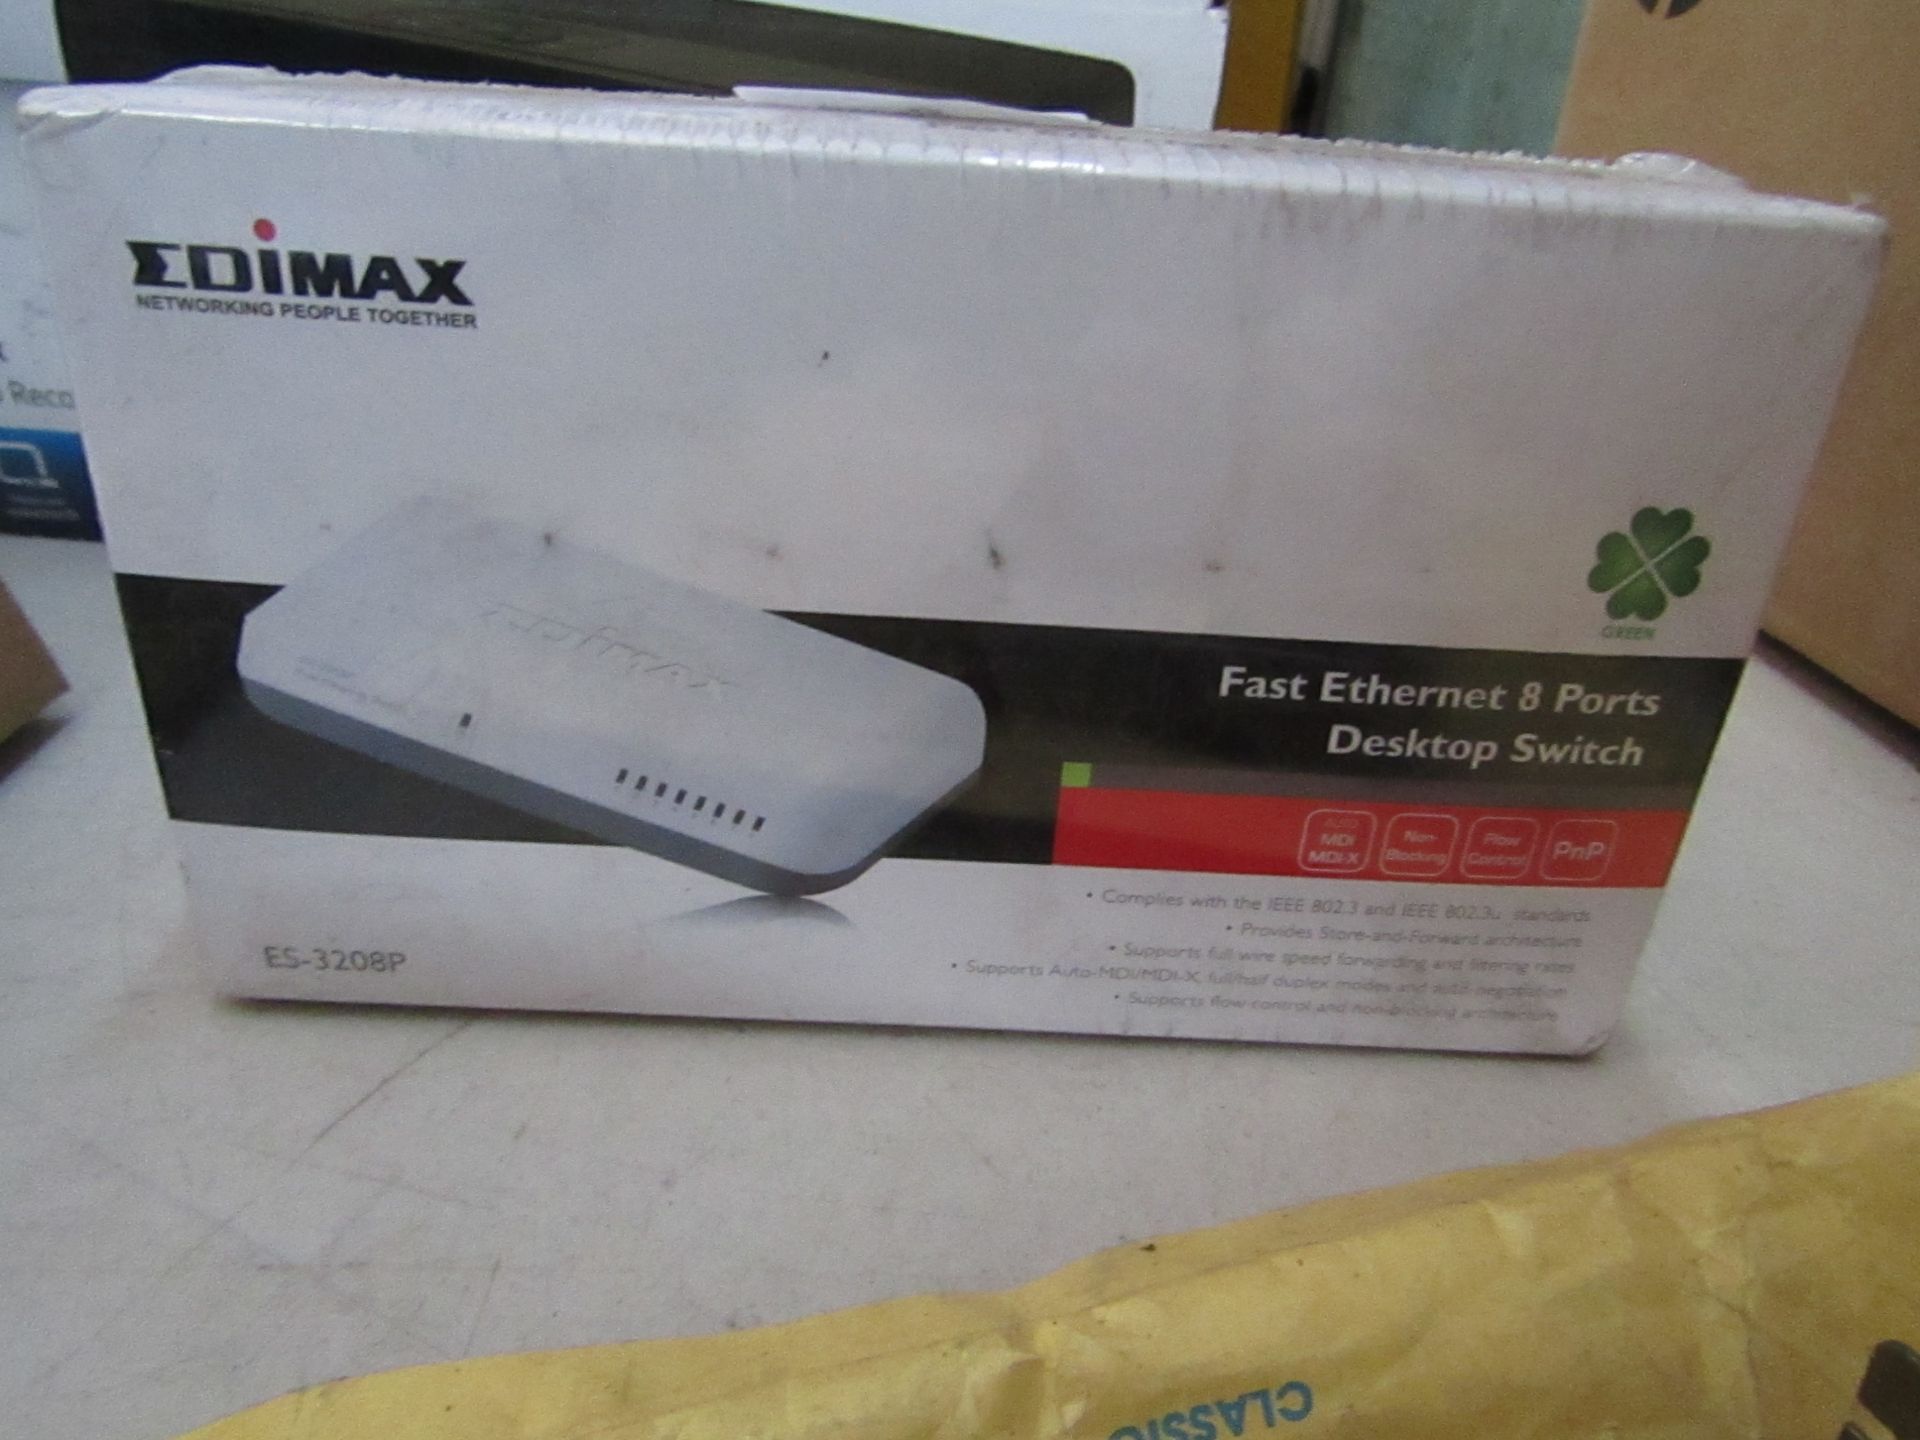 1x Edimax Fast Ethernet 8 Ports Desktop Switch - Unchecked Customer Return - RRP £15